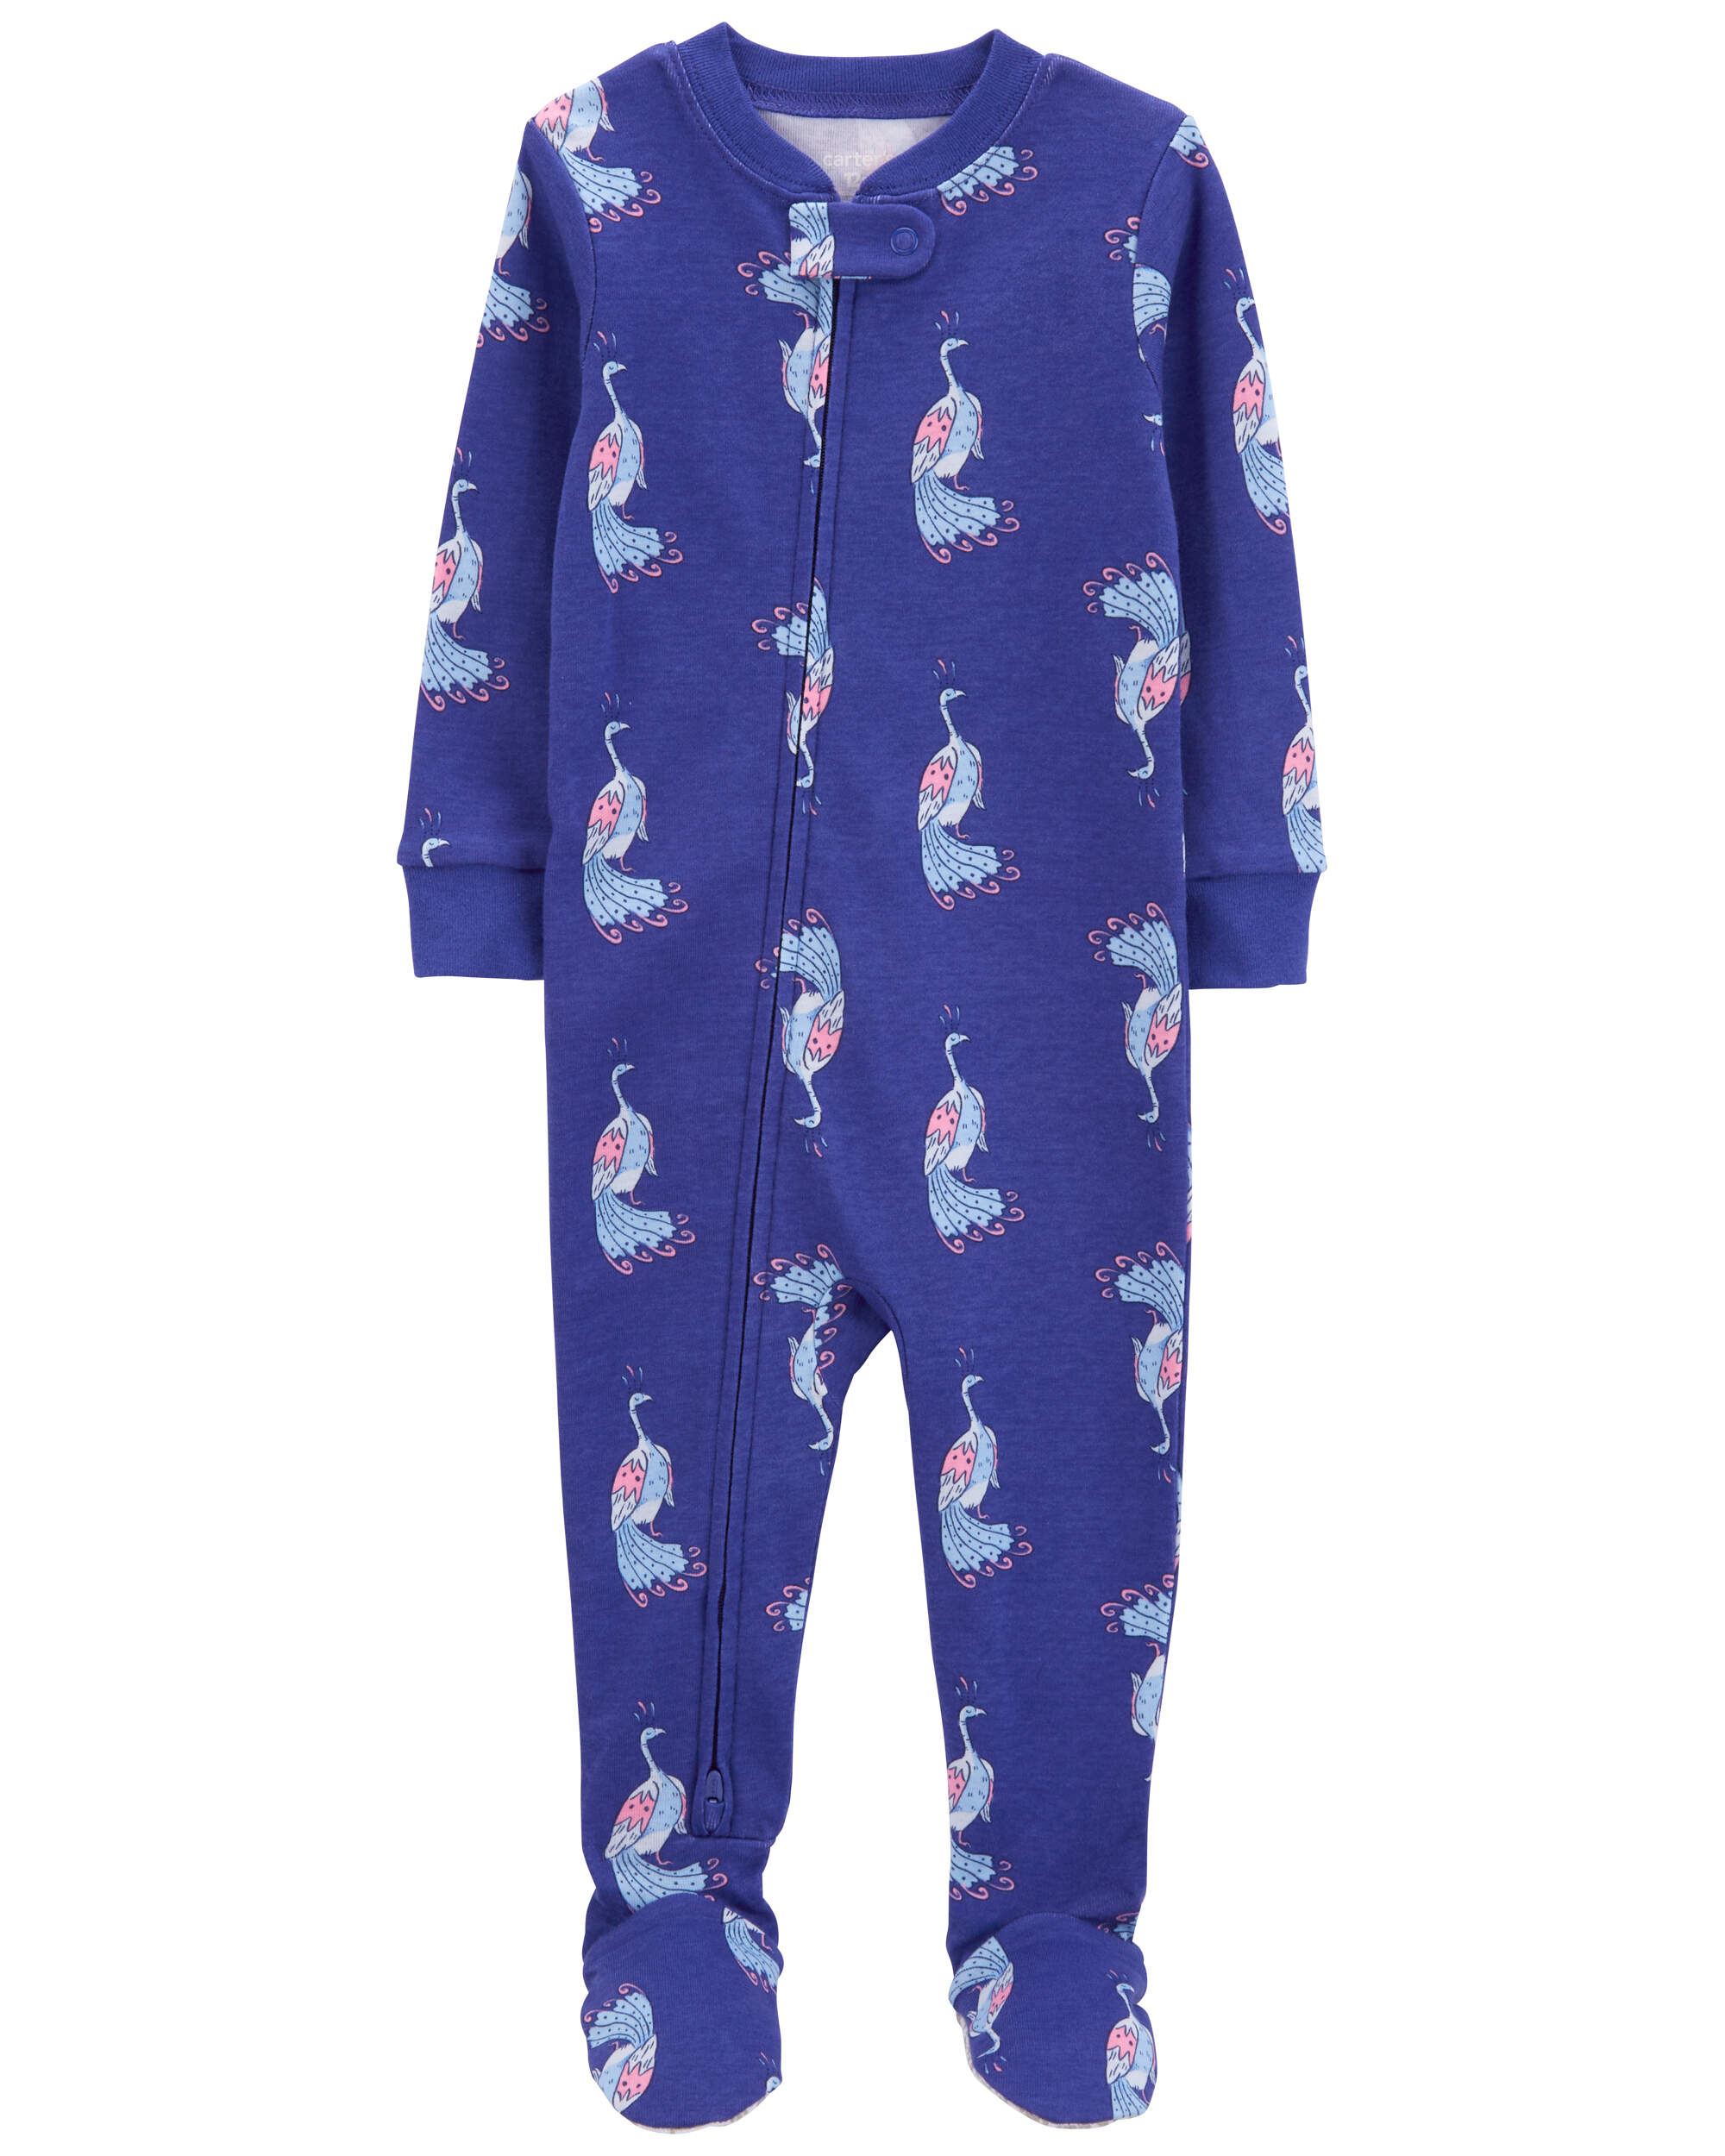 Baby 1-Piece Peacock 100% Snug Fit Cotton Footie Pyjamas